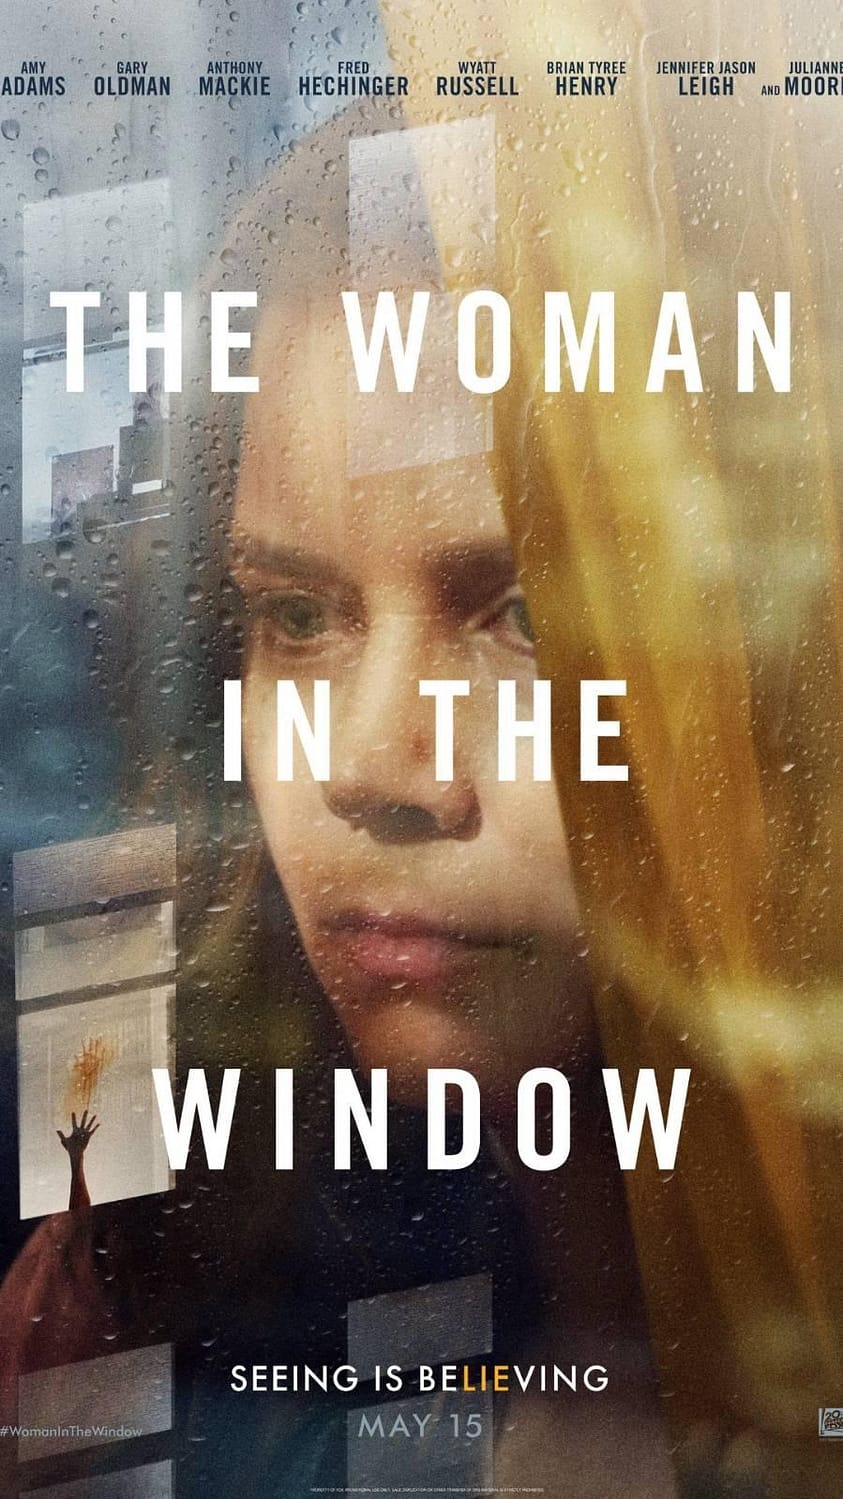 The Woman in the Window ส่องปมมรณะ (2021)